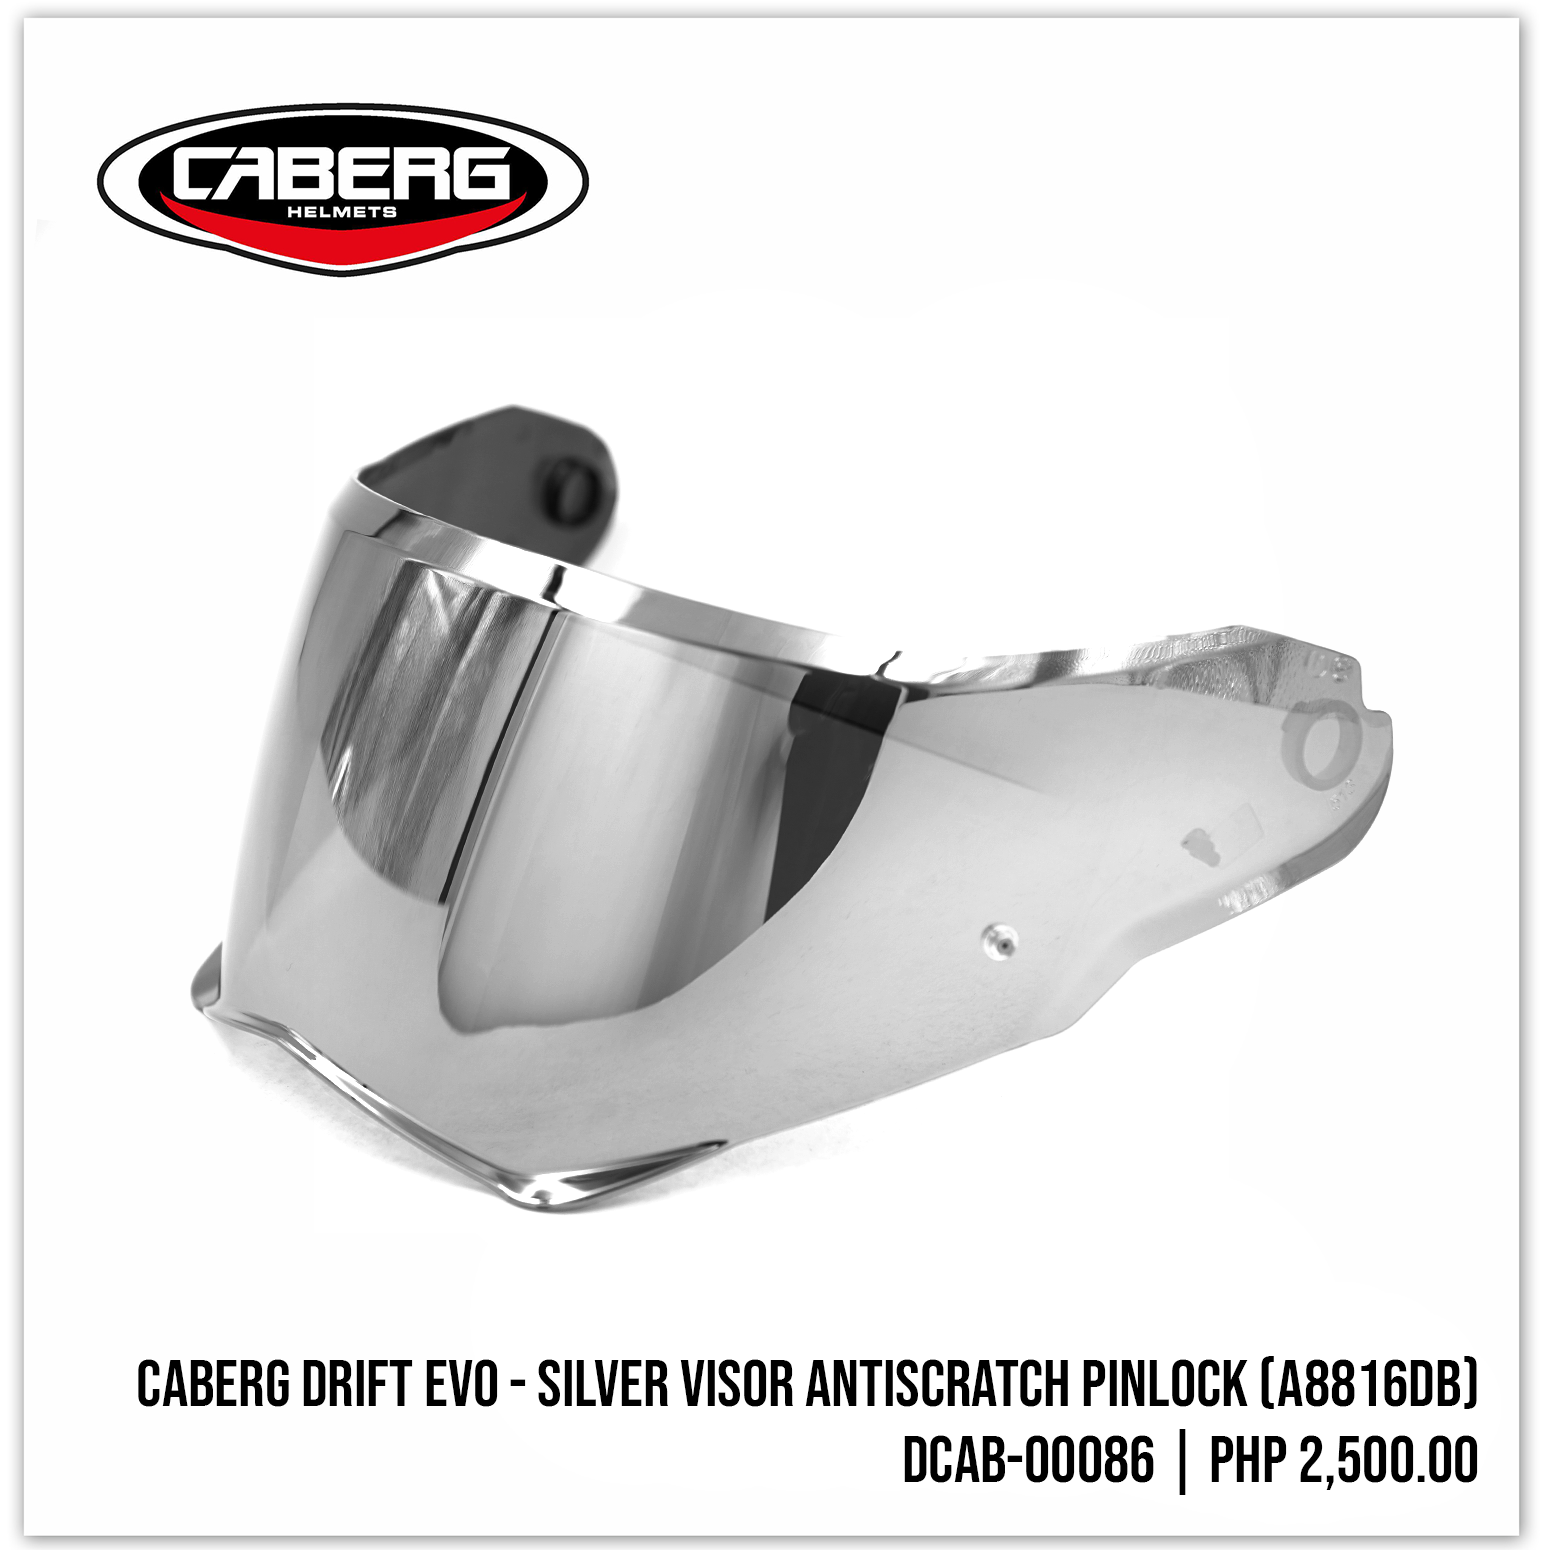 Caberg Drift Evo - Silver Visor Antiscratch Pinlock (A8816DB)